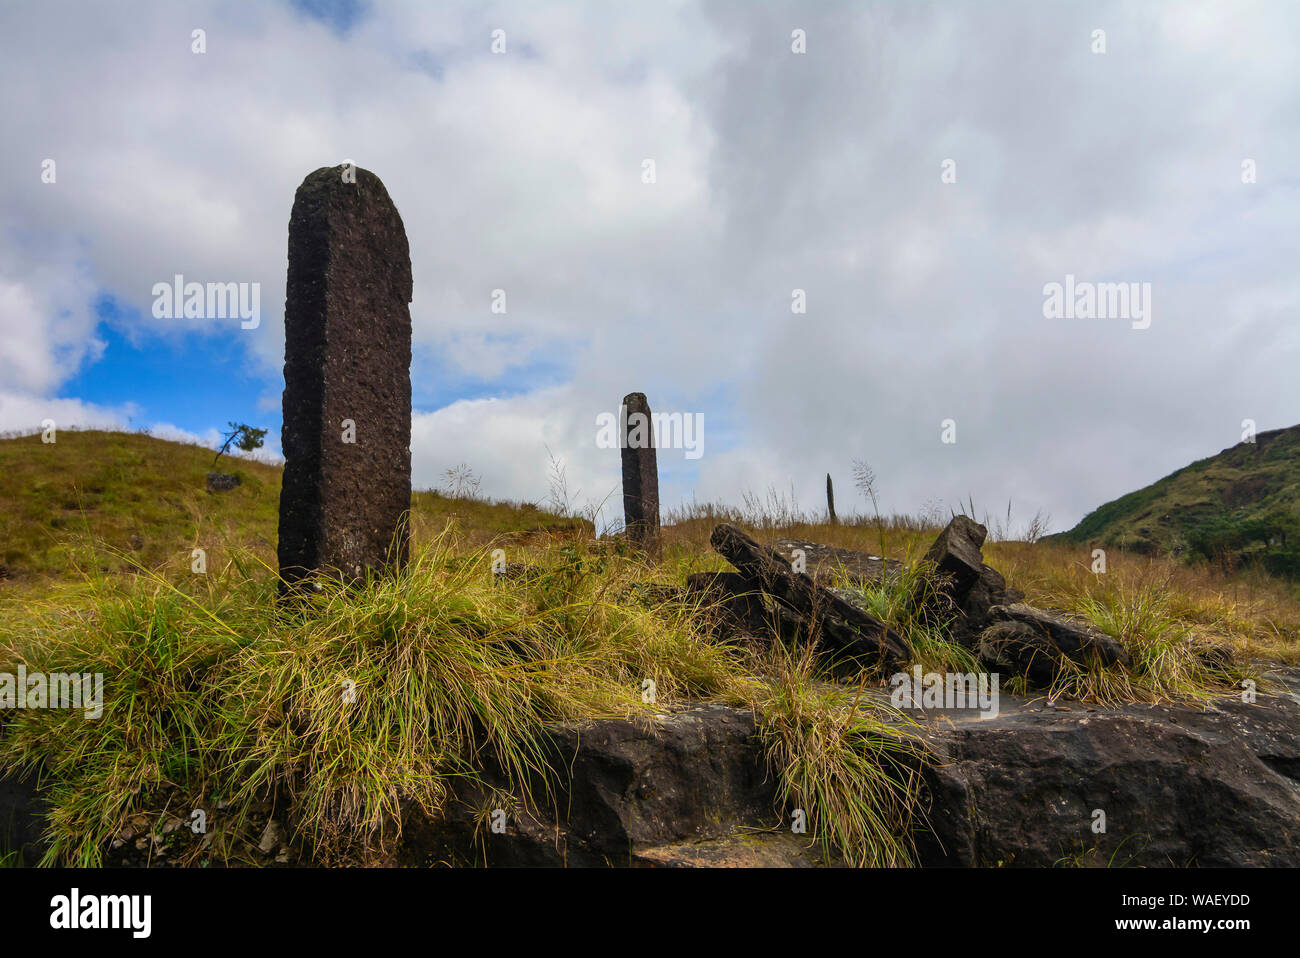 Khasi monoliths for remembering ancestors, Cherrapunjee, Meghalaya, India. Stock Photo